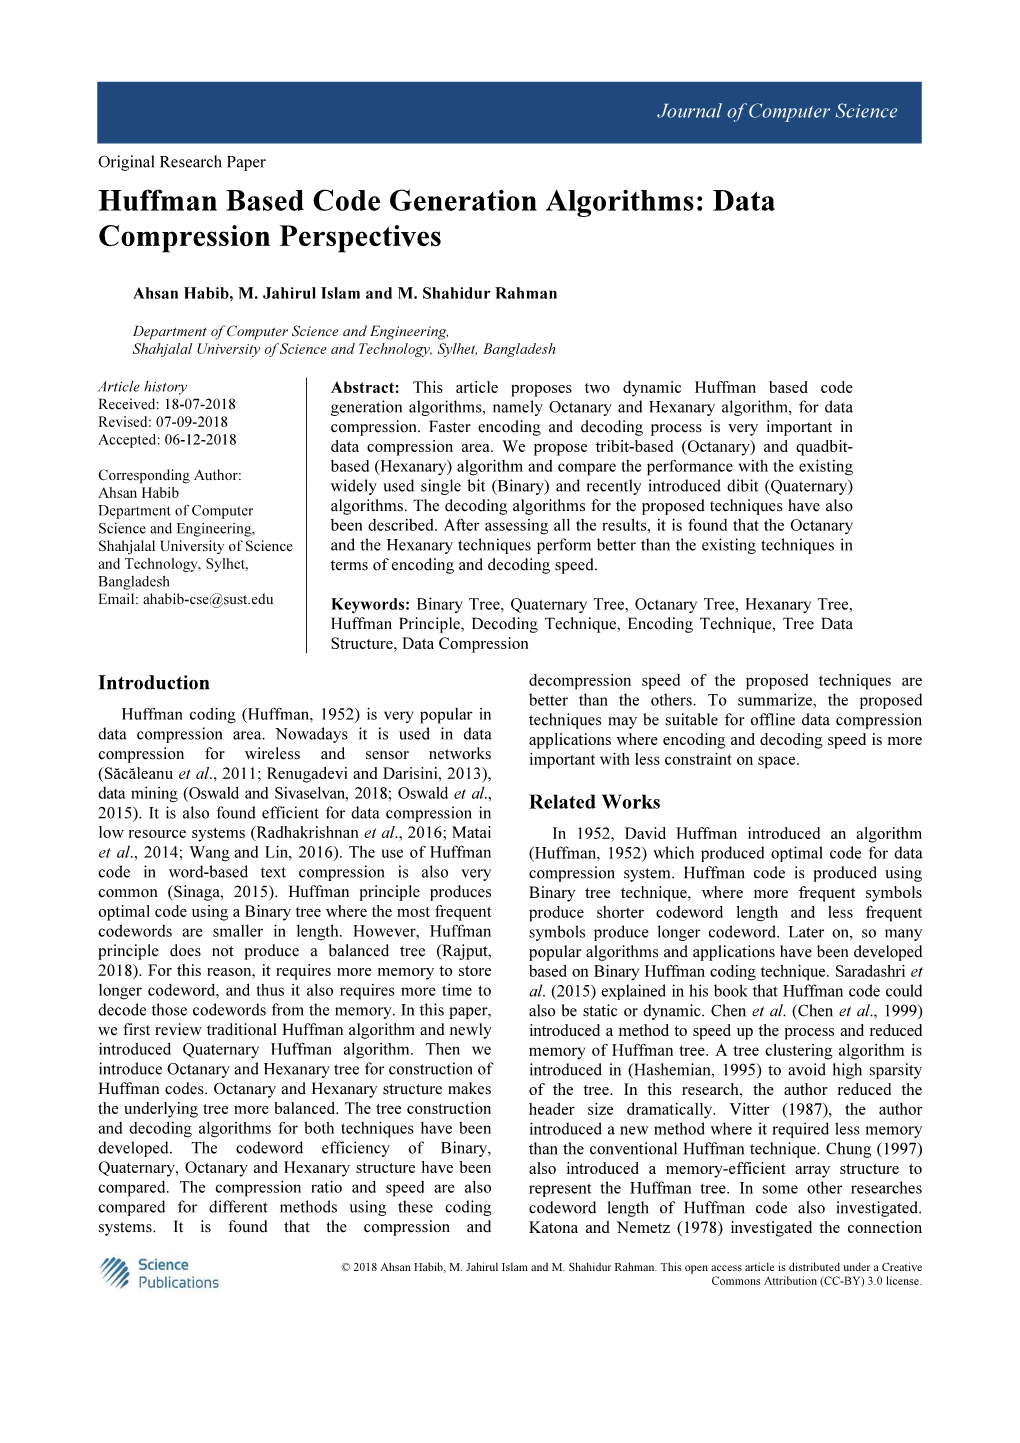 Huffman Based Code Generation Algorithms: Data Compression Perspectives